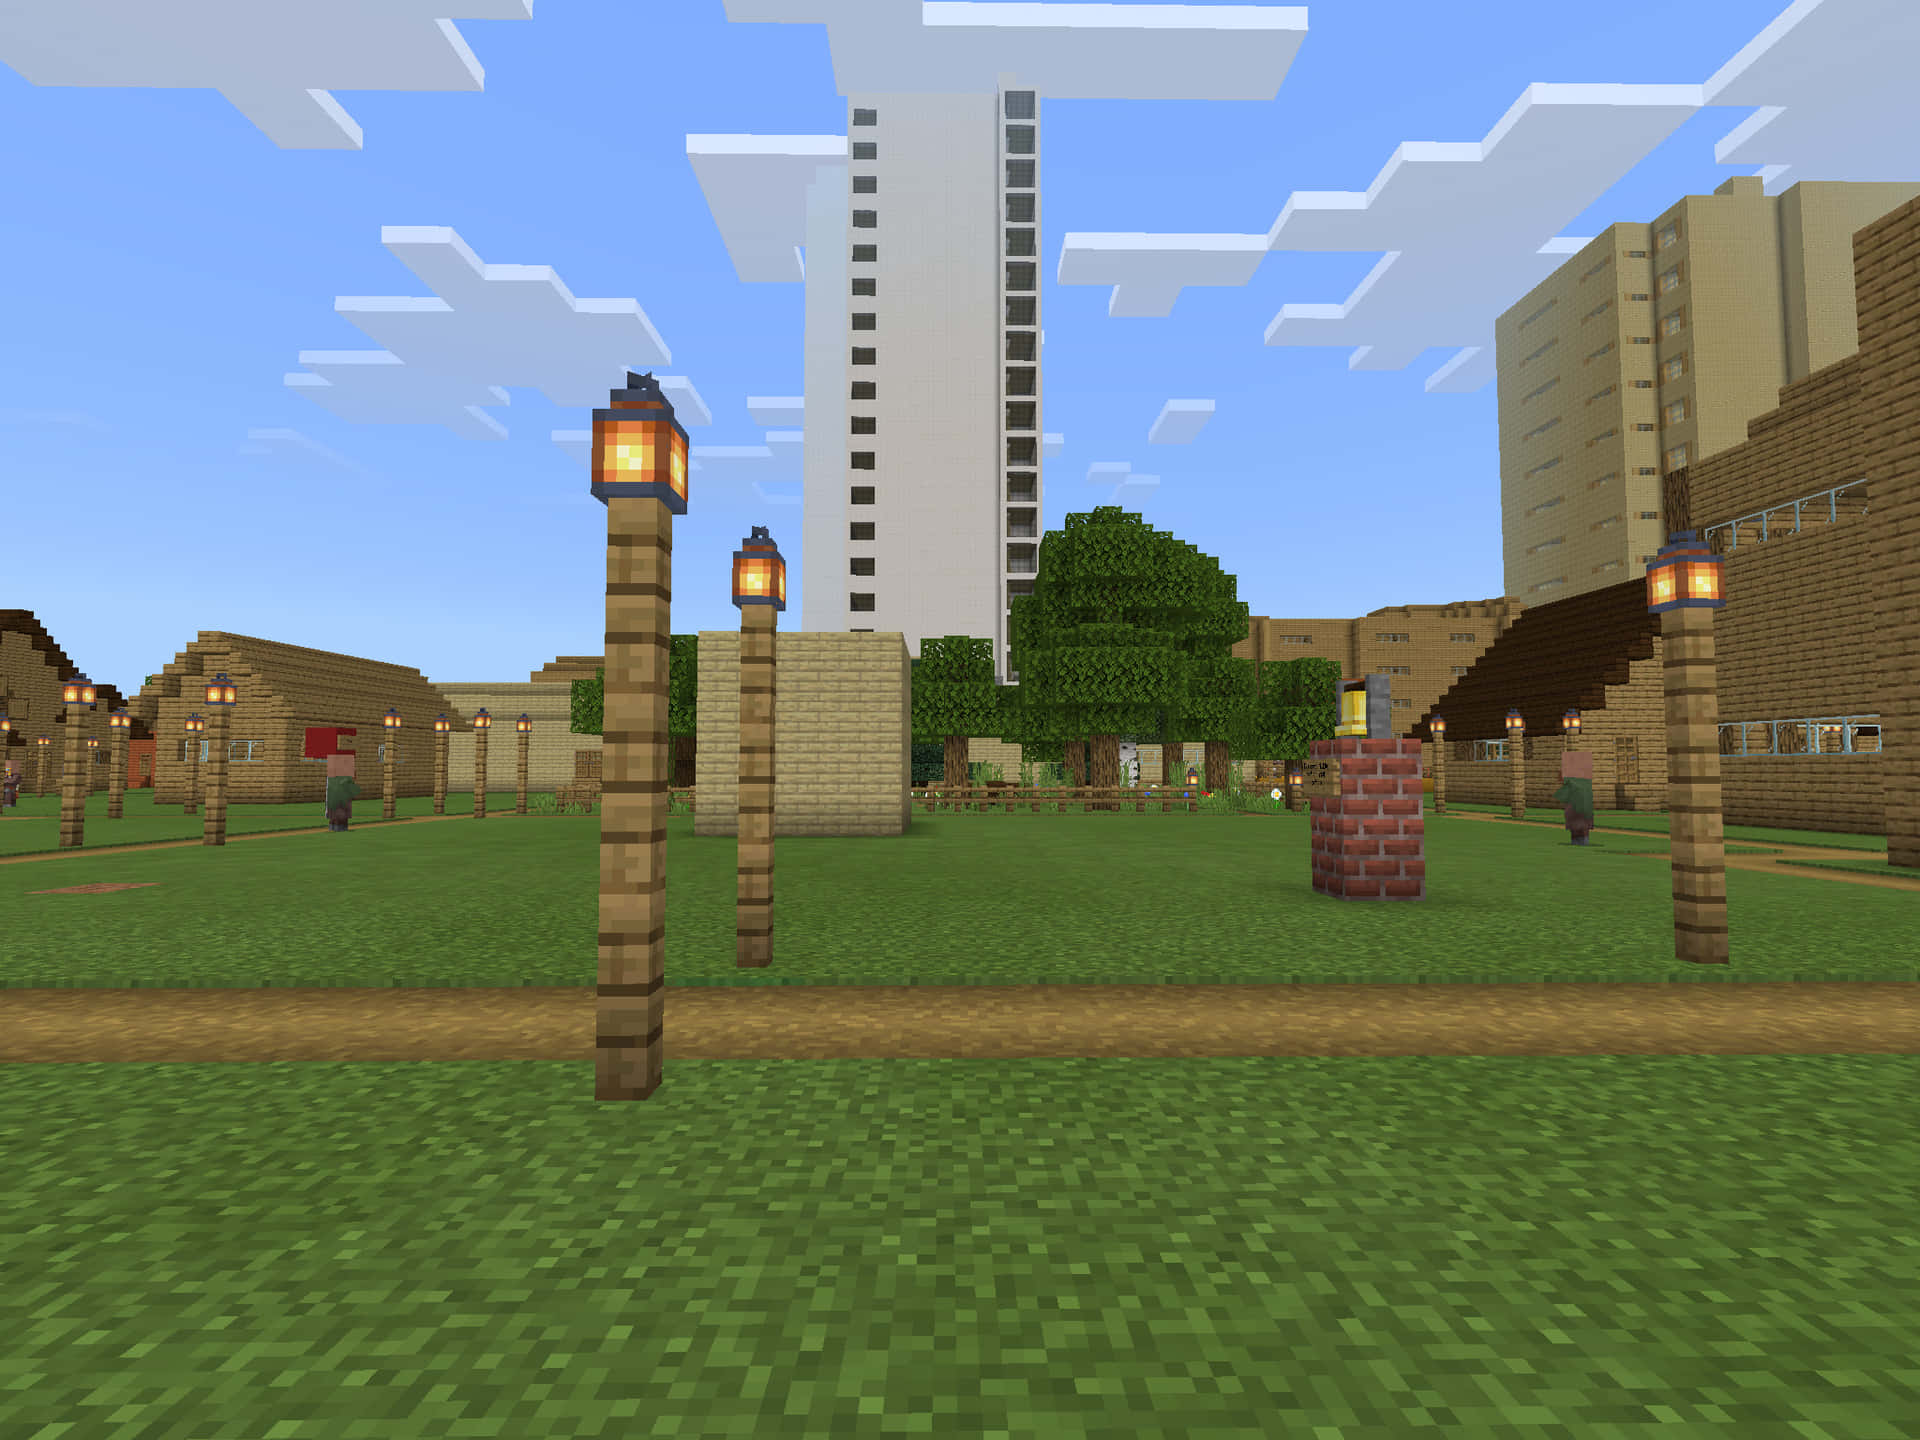 A Vibrant Minecraft City Awaits! Wallpaper